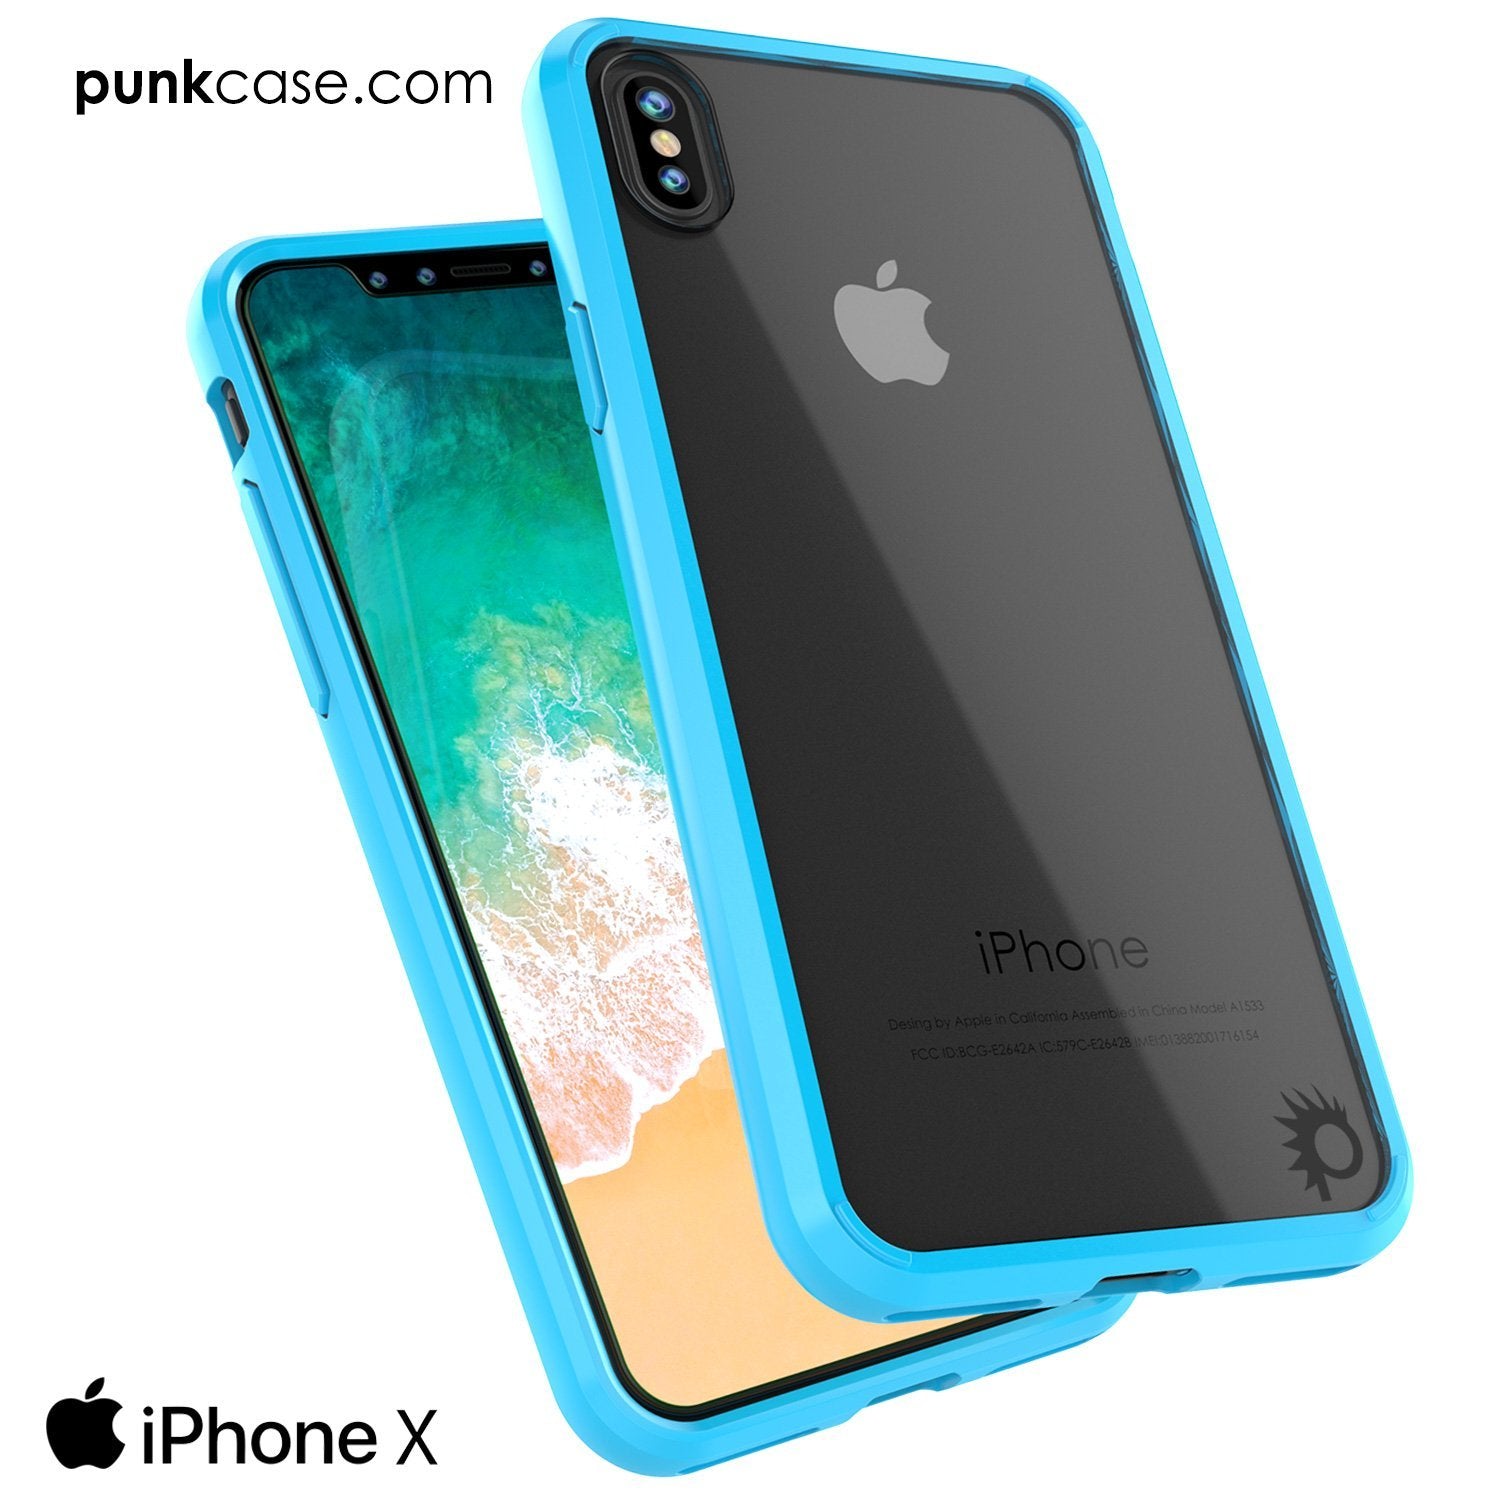 iPhone X Punkcase LUCID 2.0 Series Slim Fit Dual Layer Case Light Blue